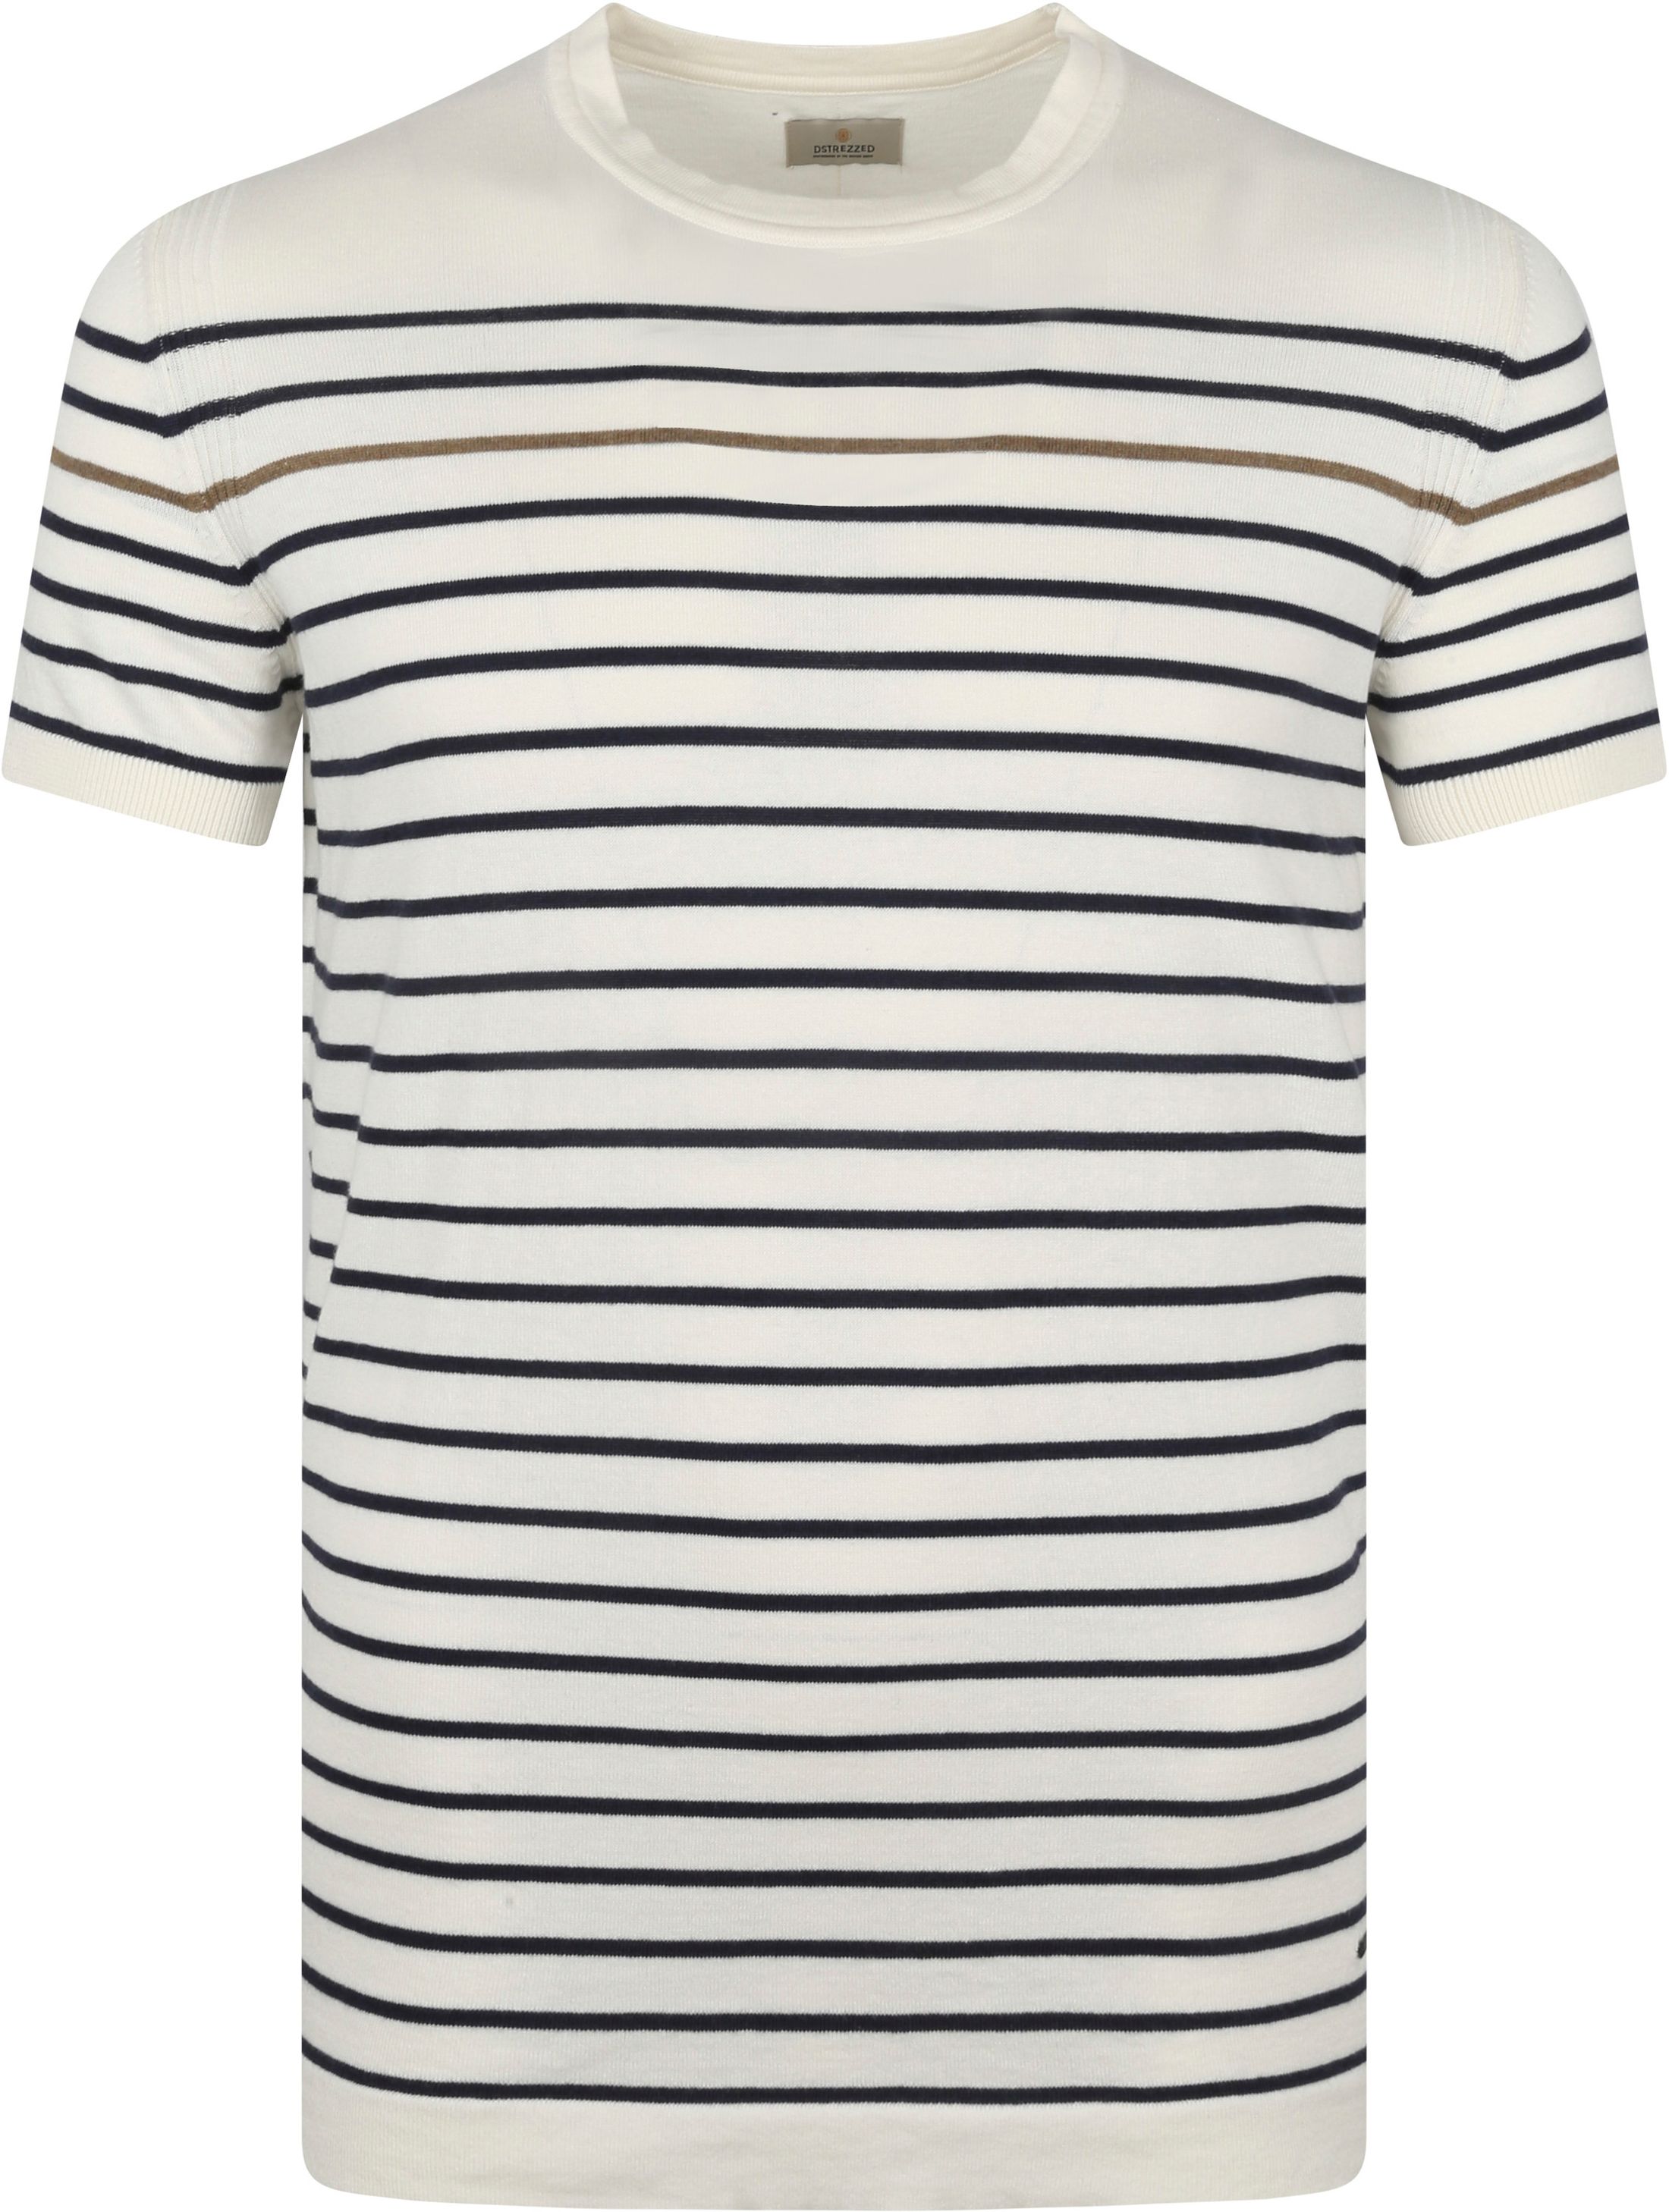 Dstrezzed T Shirt Contrast Stripes White Off-White size L